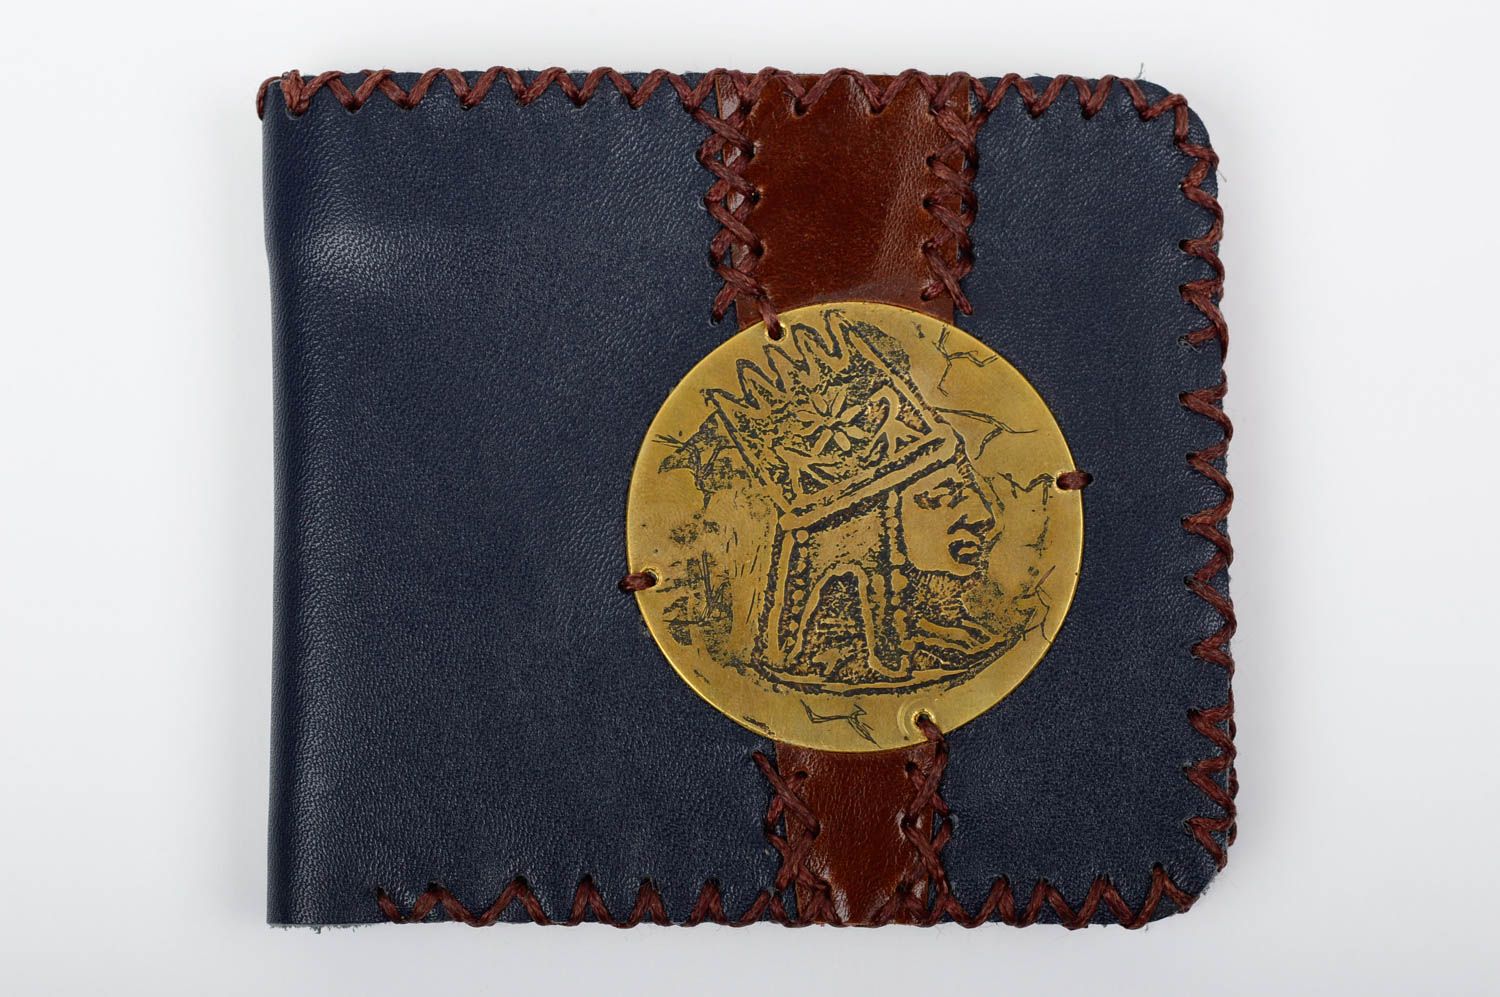 Unusual leather wallet handmade stylish purse unisex designer accessory photo 1